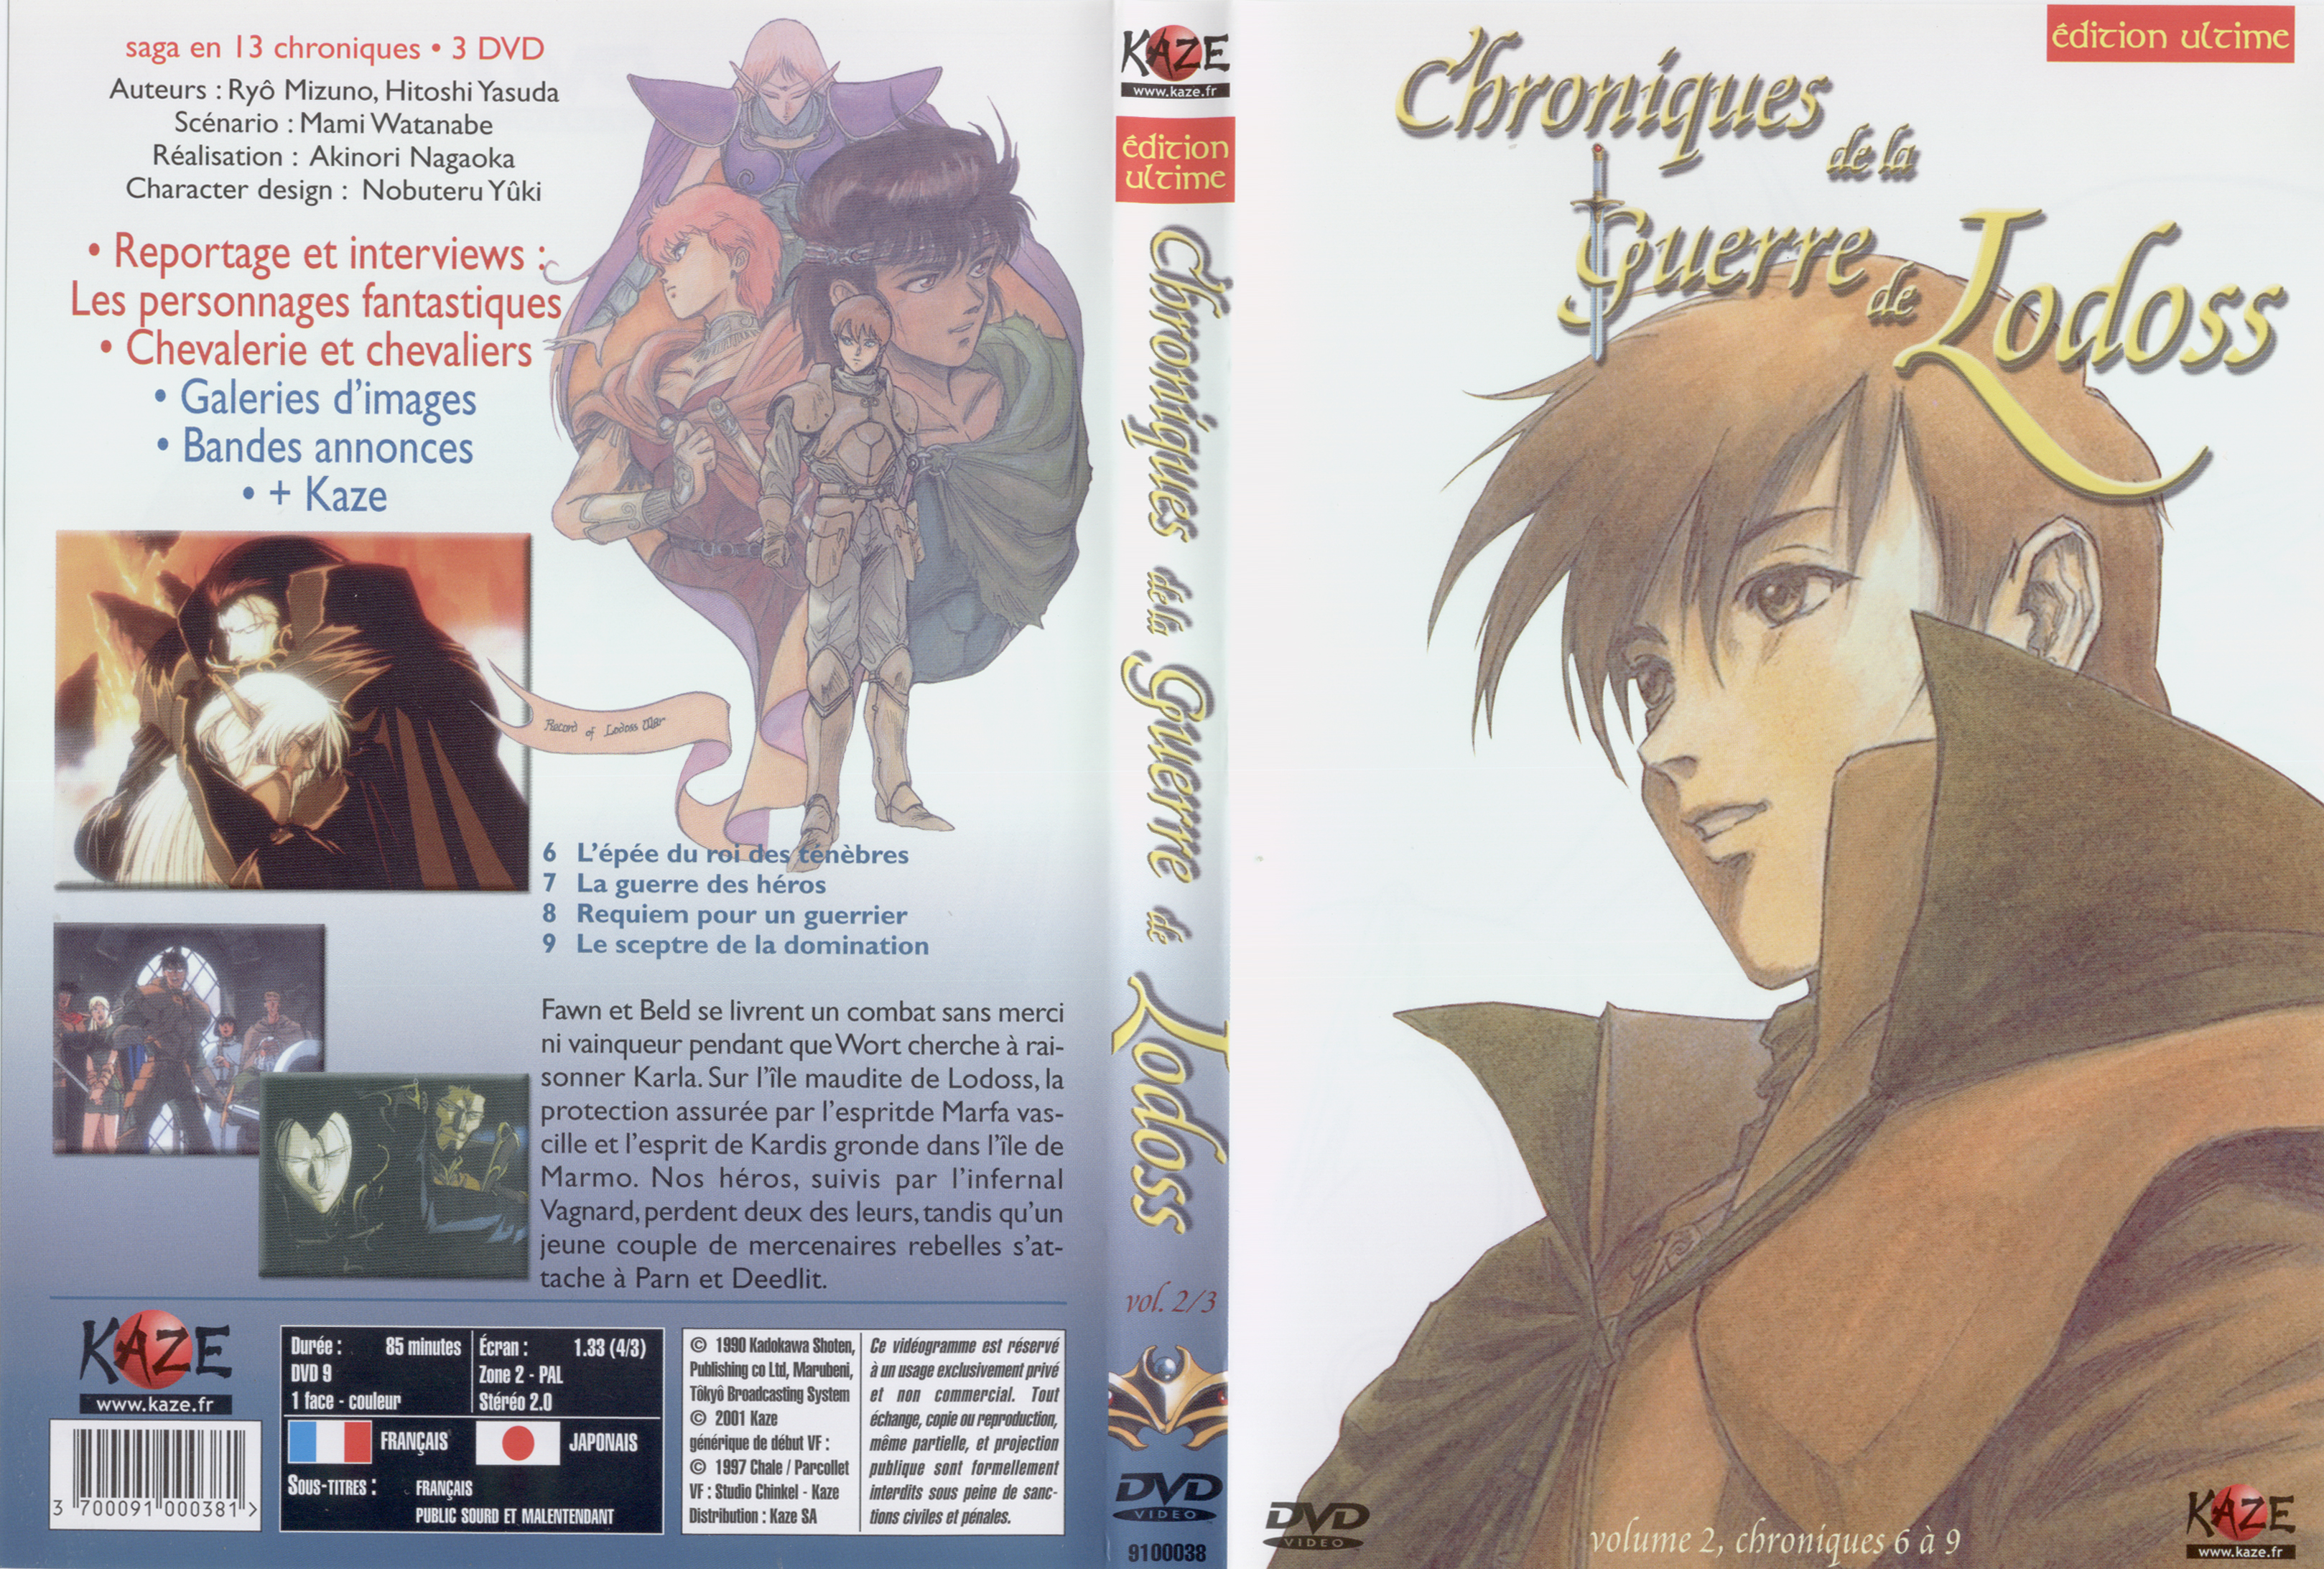 Jaquette DVD Chroniques de la guerre de lodoss vol 2 v2